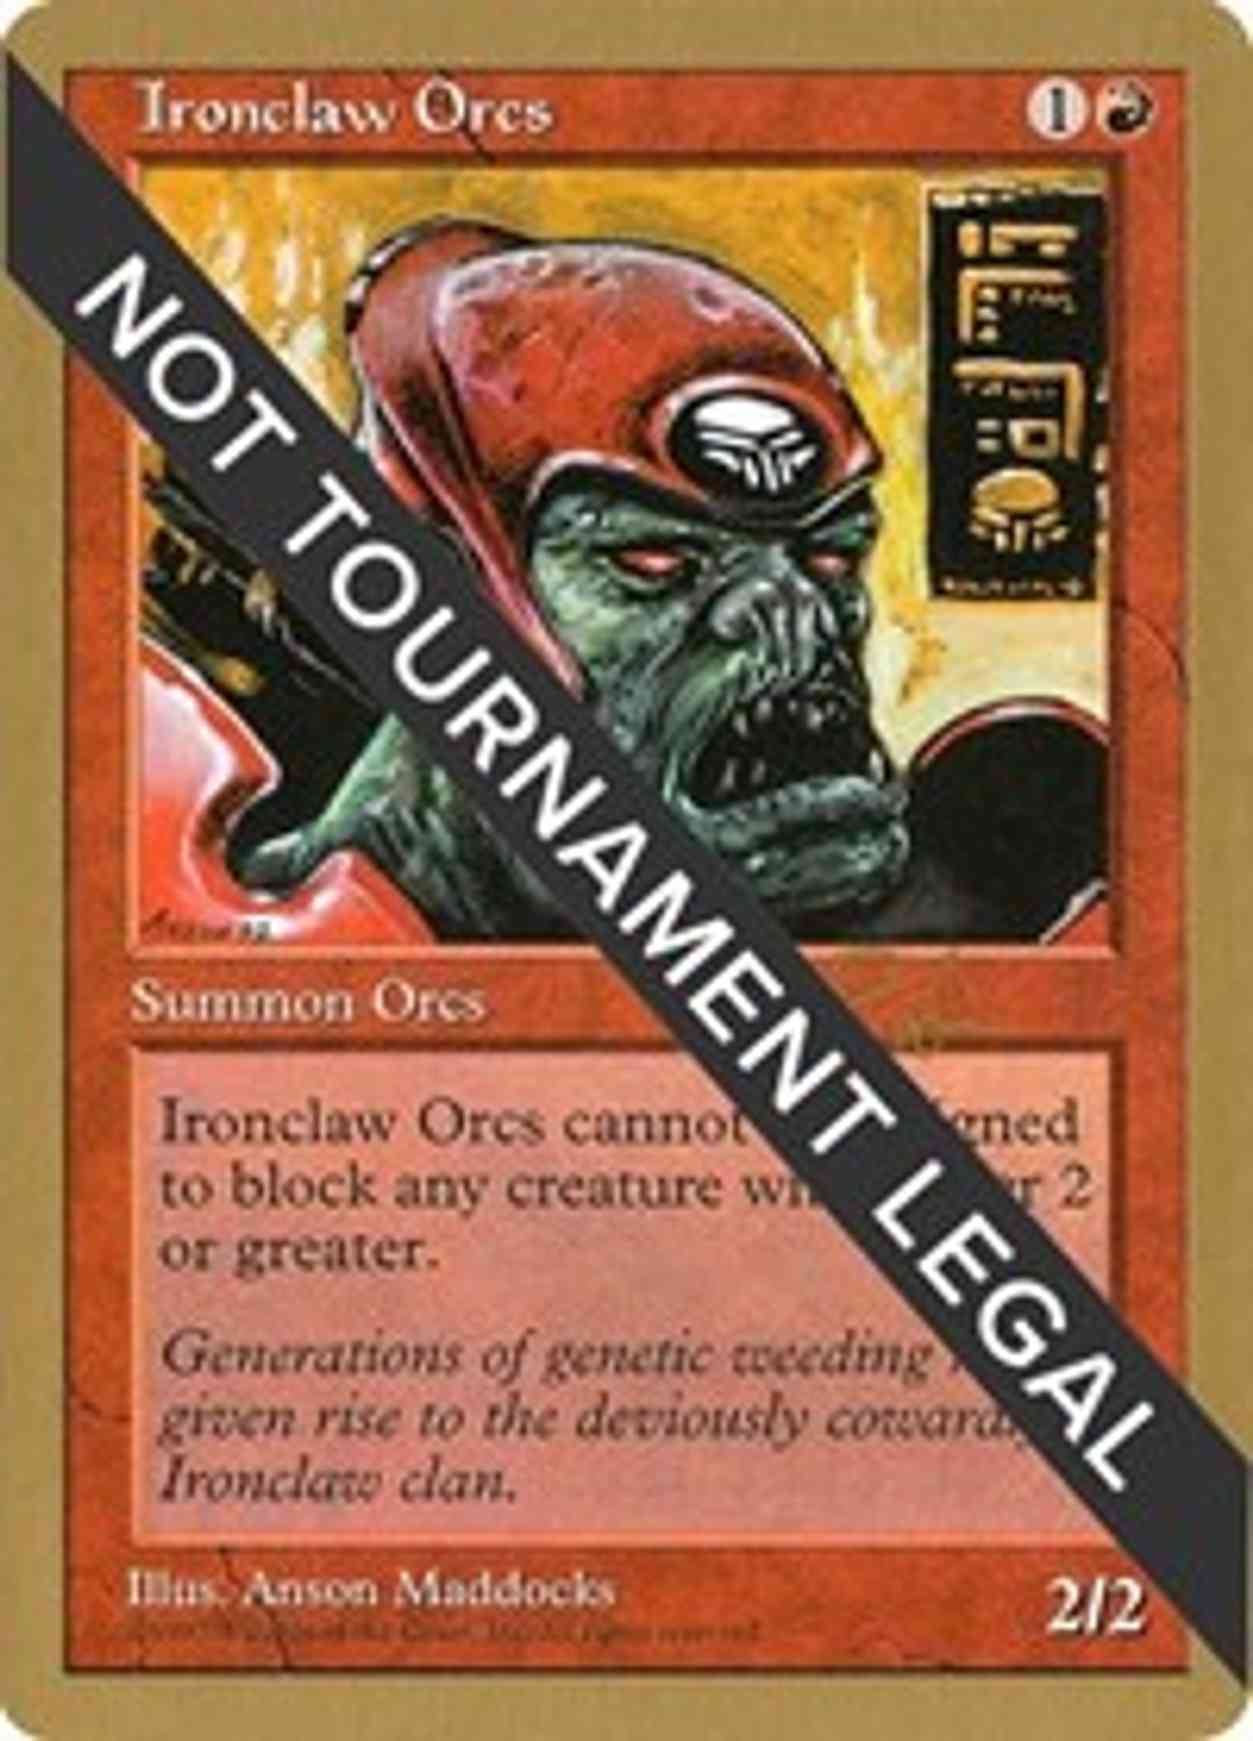 Ironclaw Orcs - 1998 Ben Rubin (5ED) magic card front